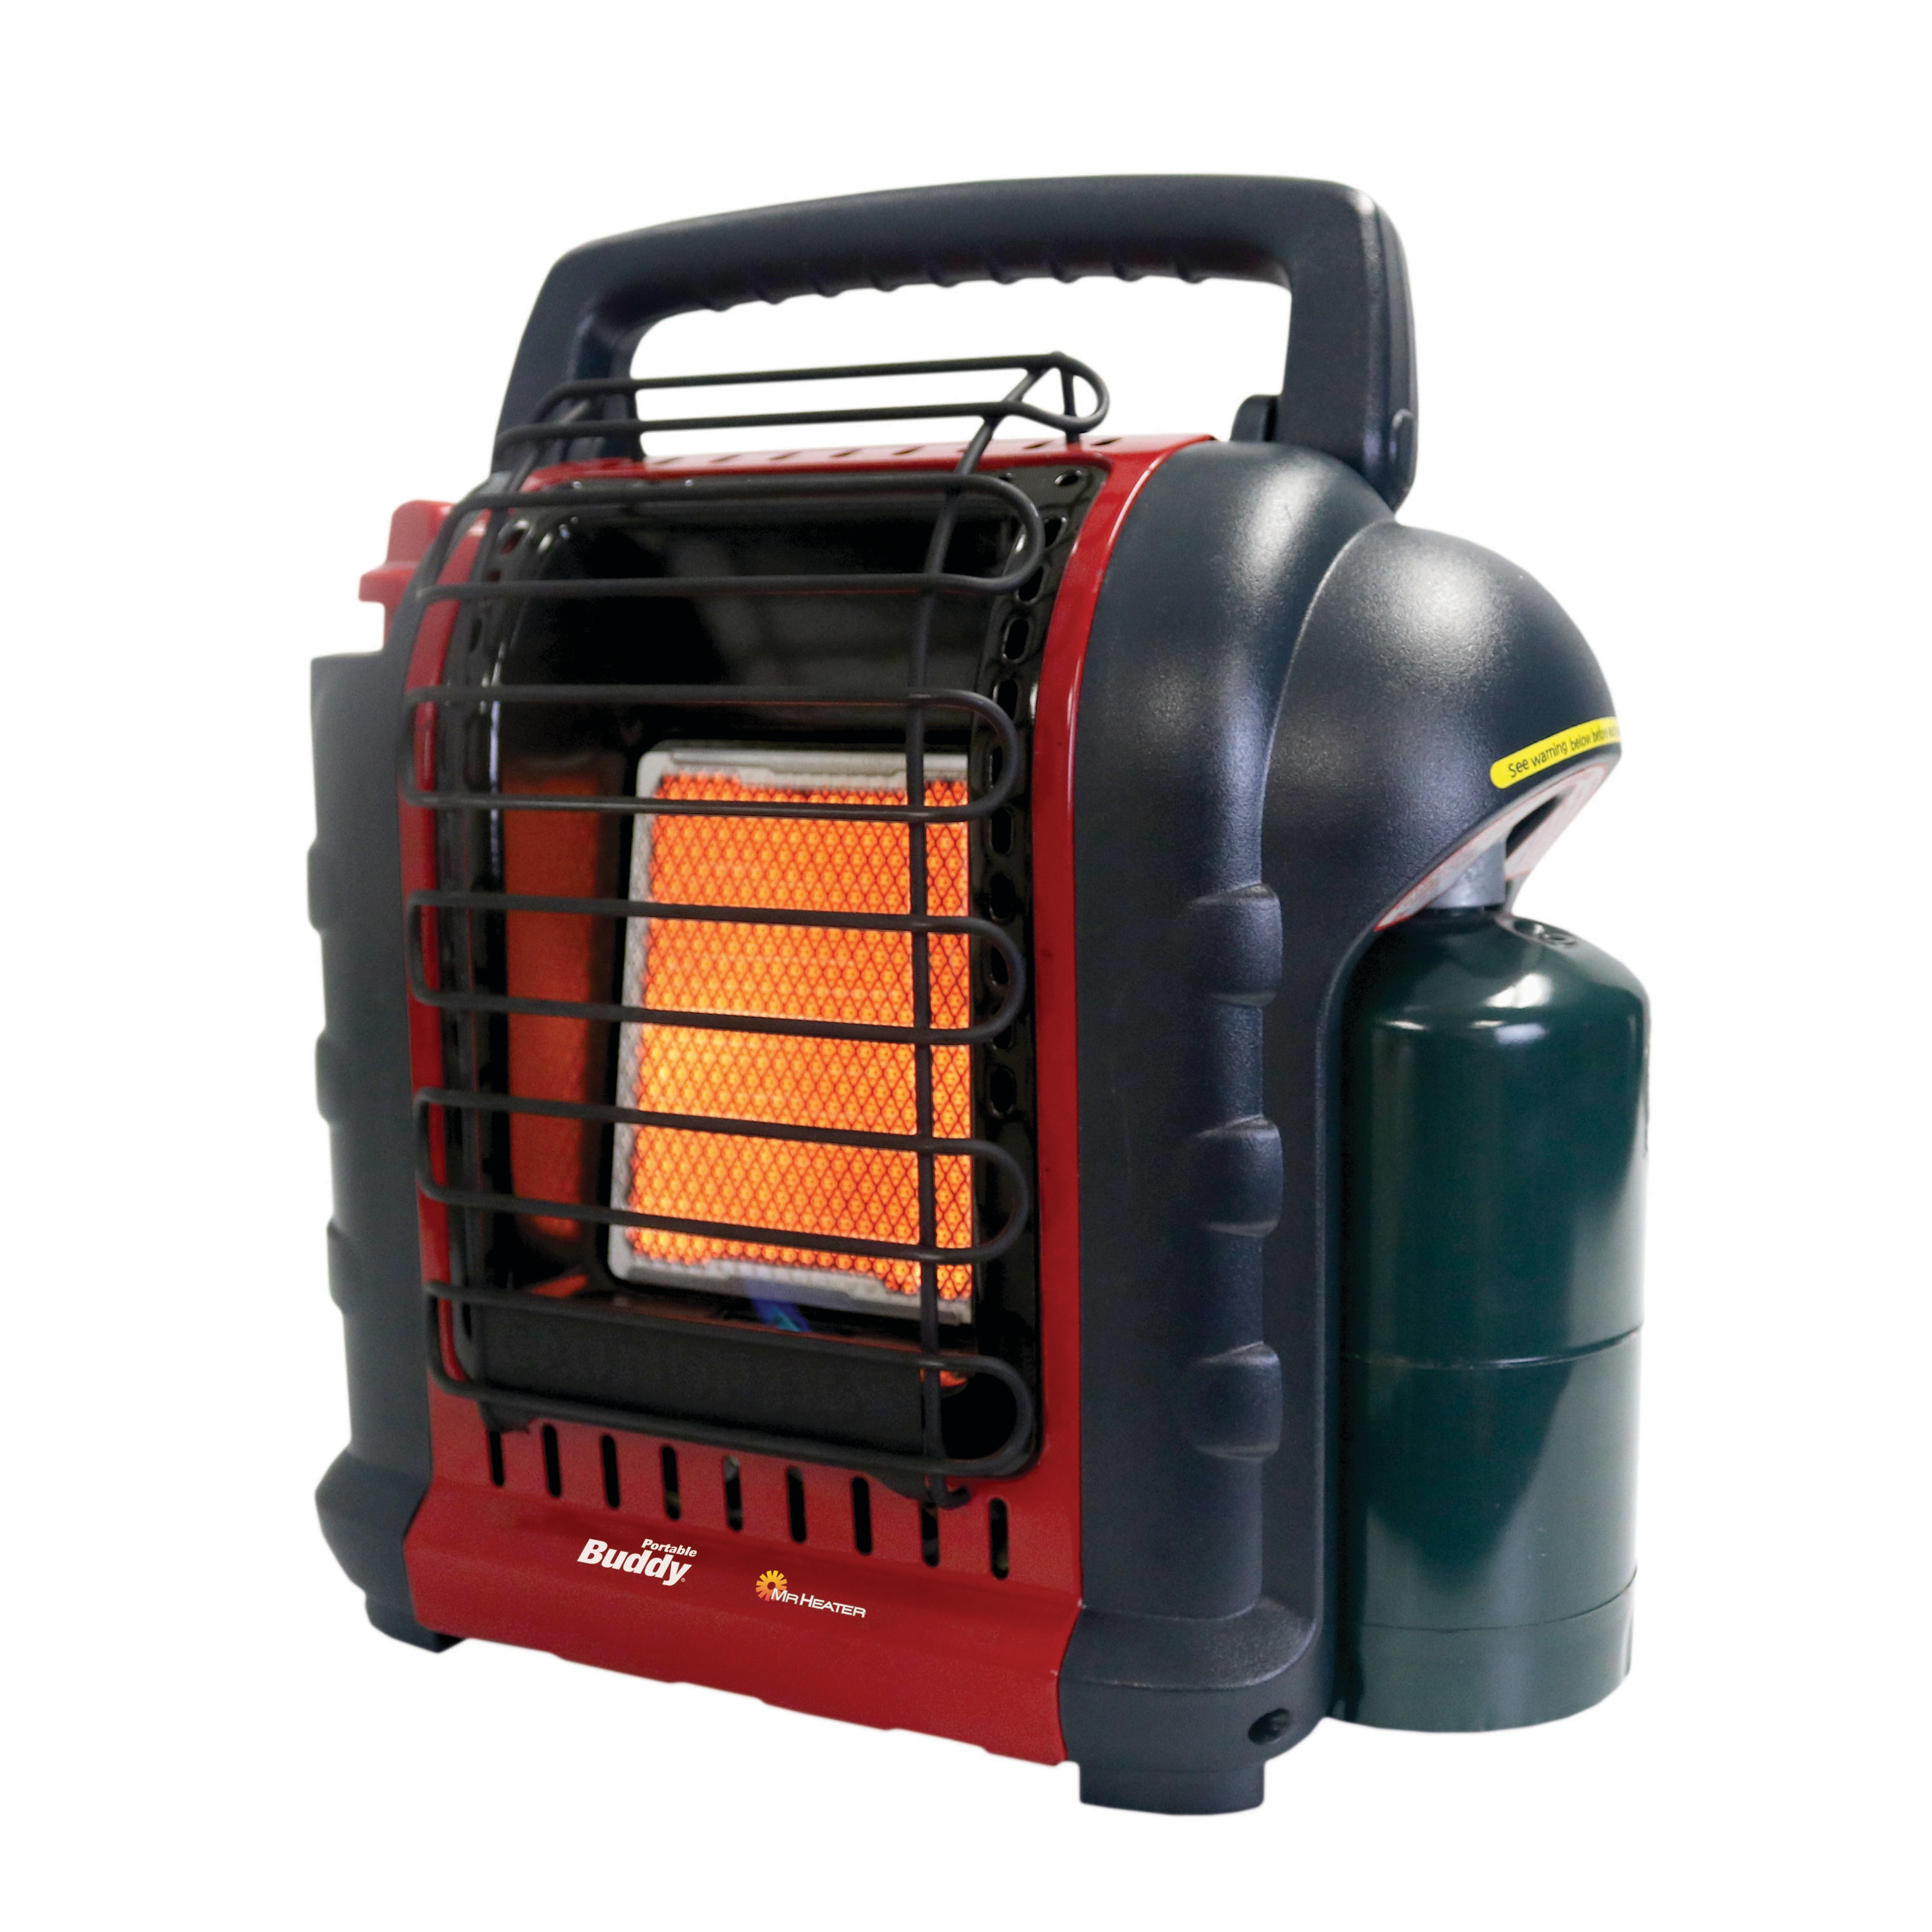 Mr. Heater 45,000 BTU Radiant Propane Portable Heater at AutoZone